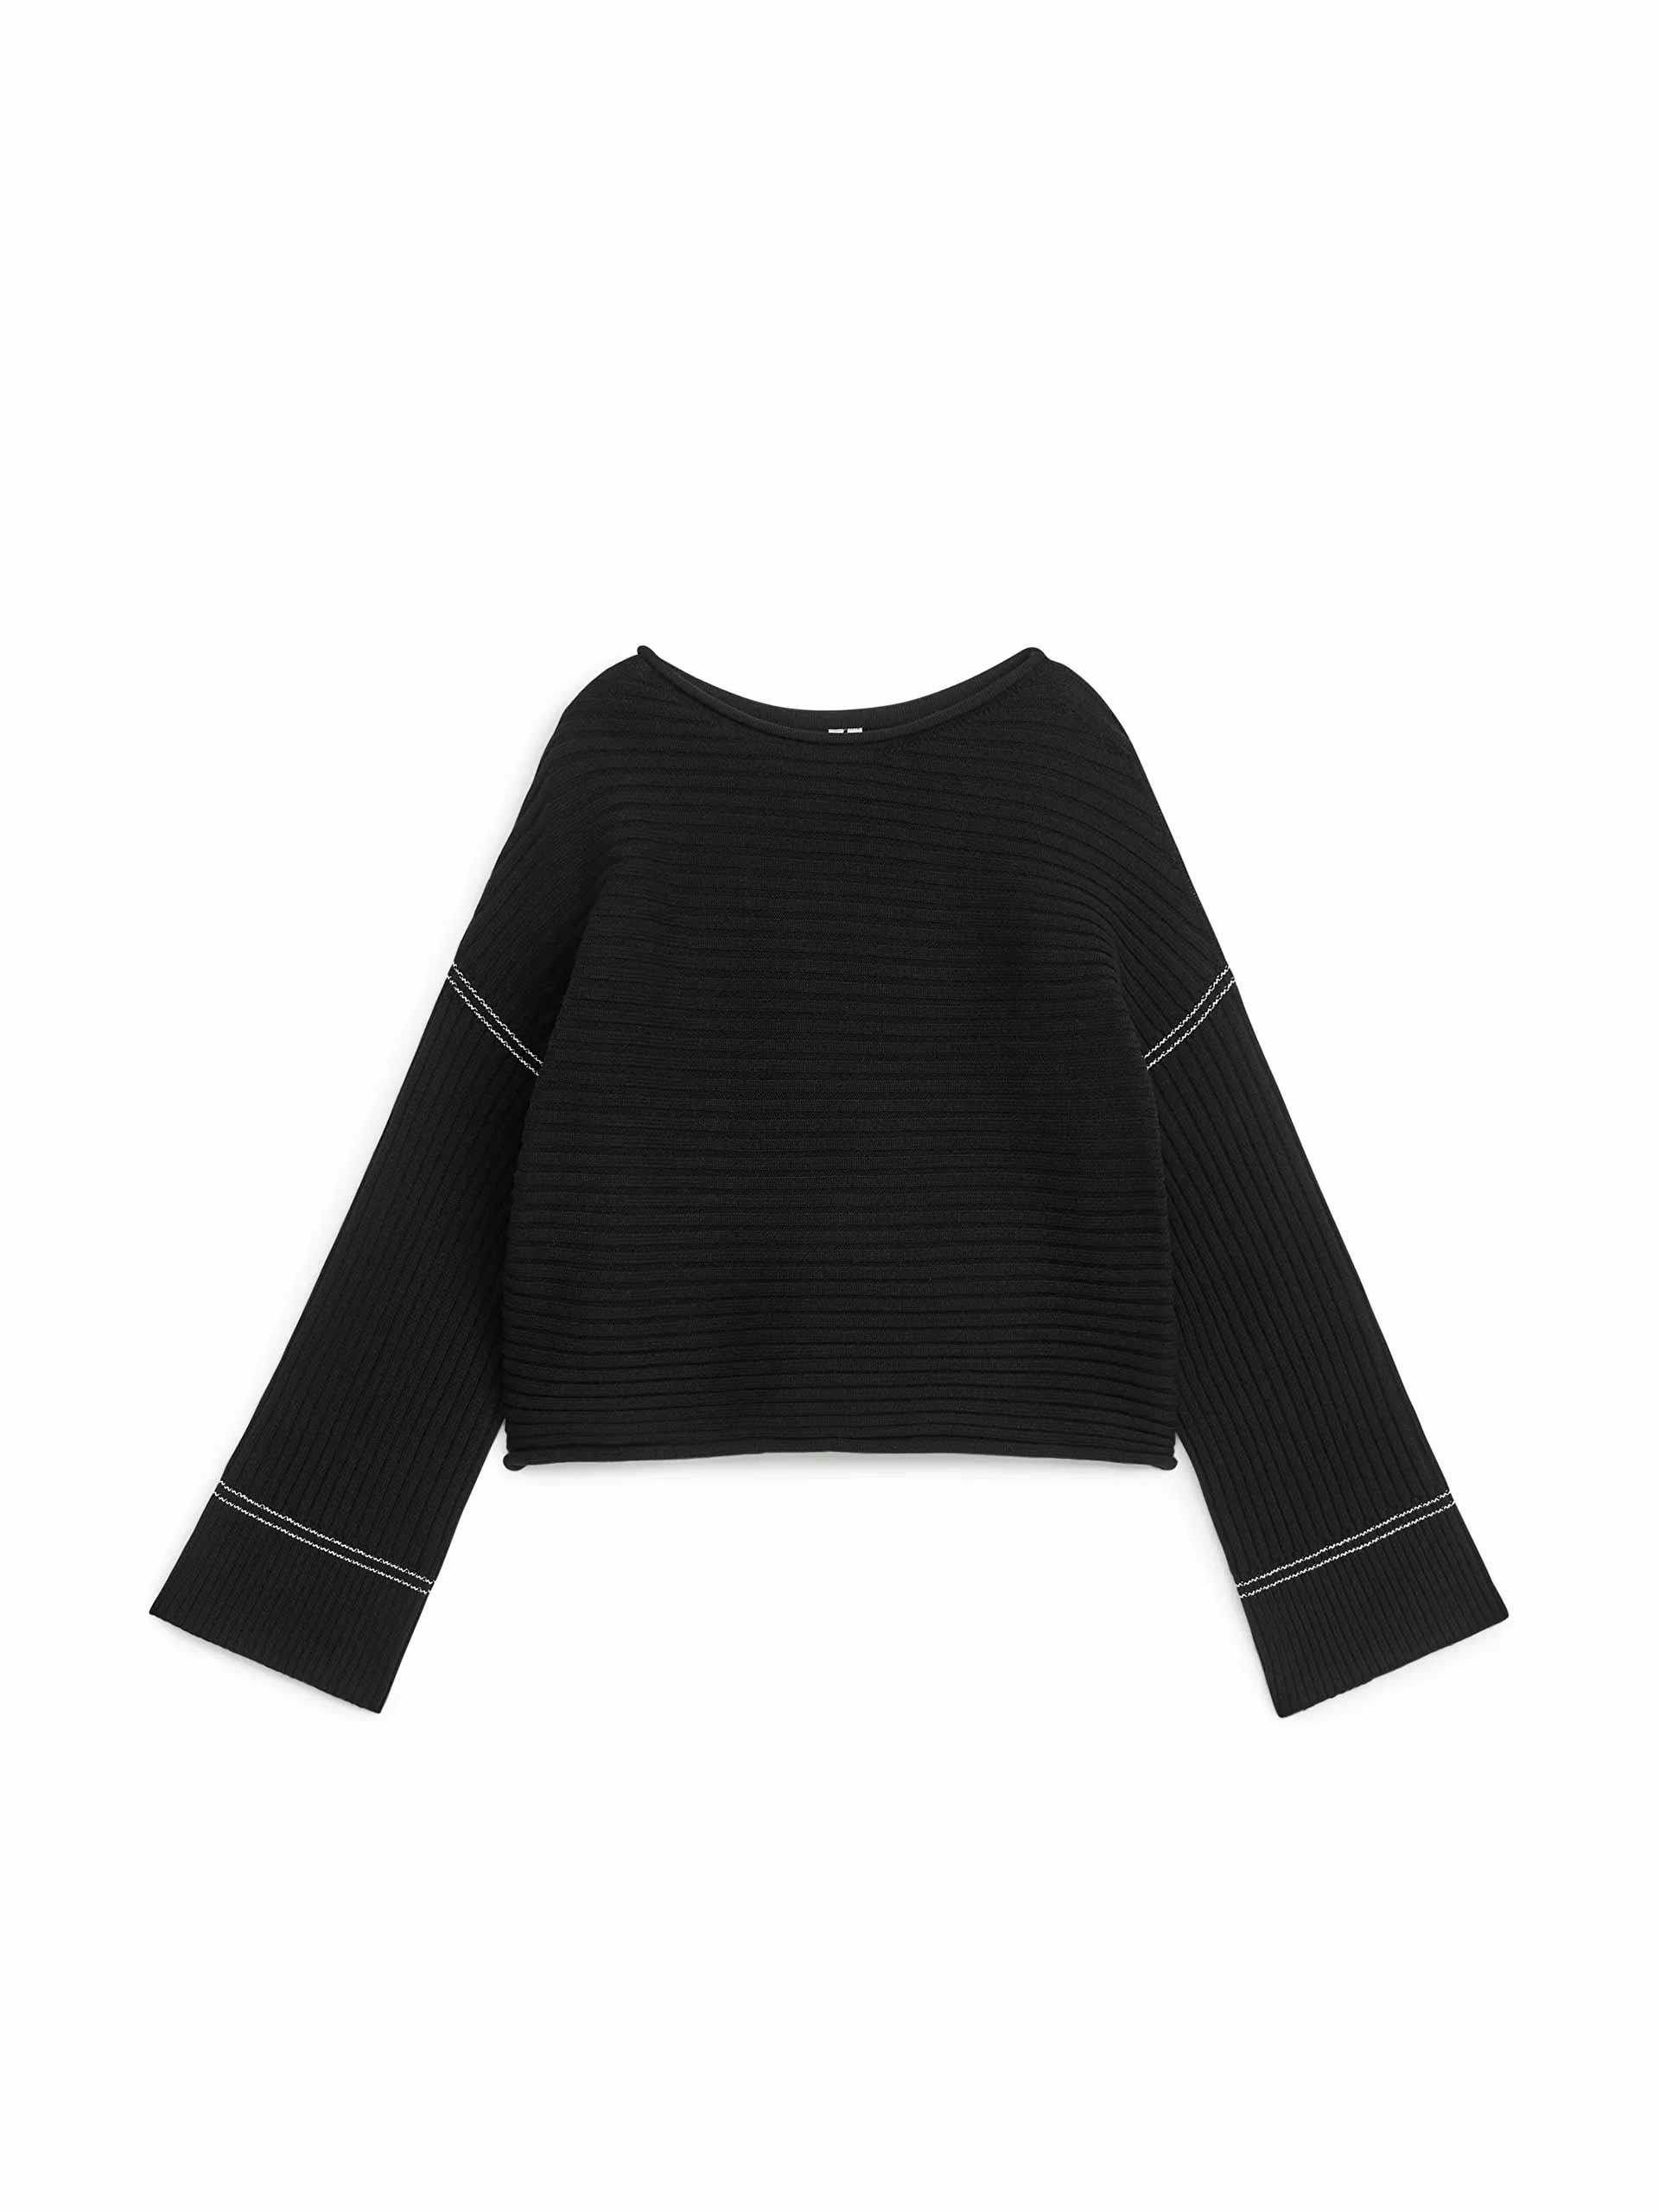 Black jumper with white stitching